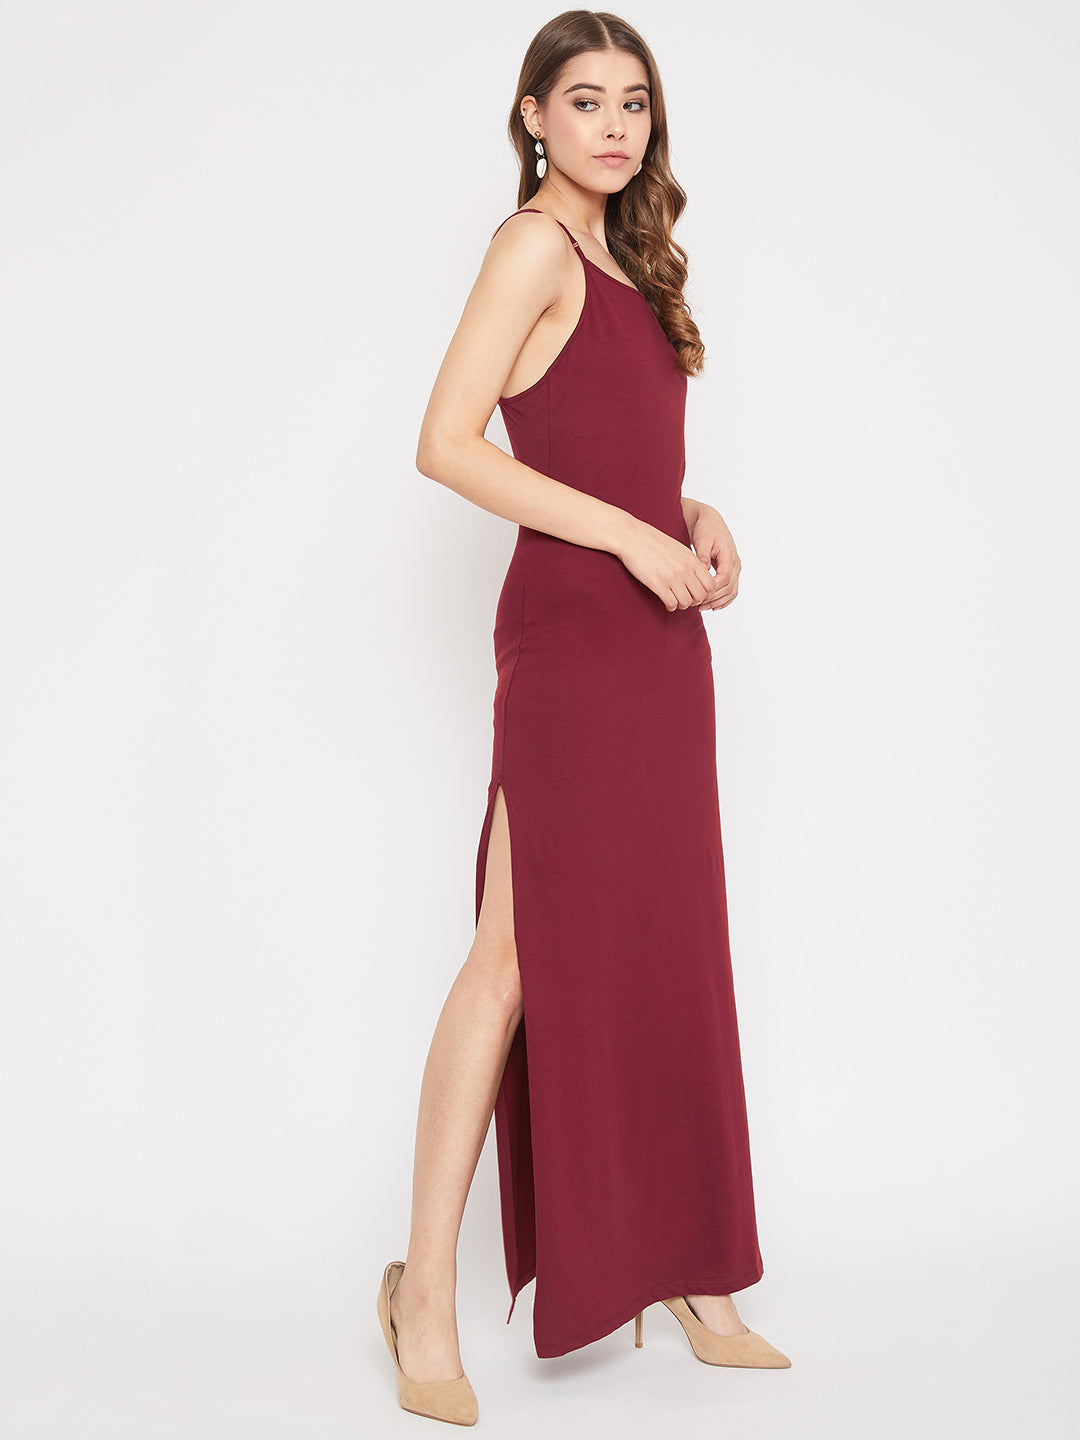 Berrylush Women Solid Maroon Round-Neck Thigh-High Slit Maxi Dress